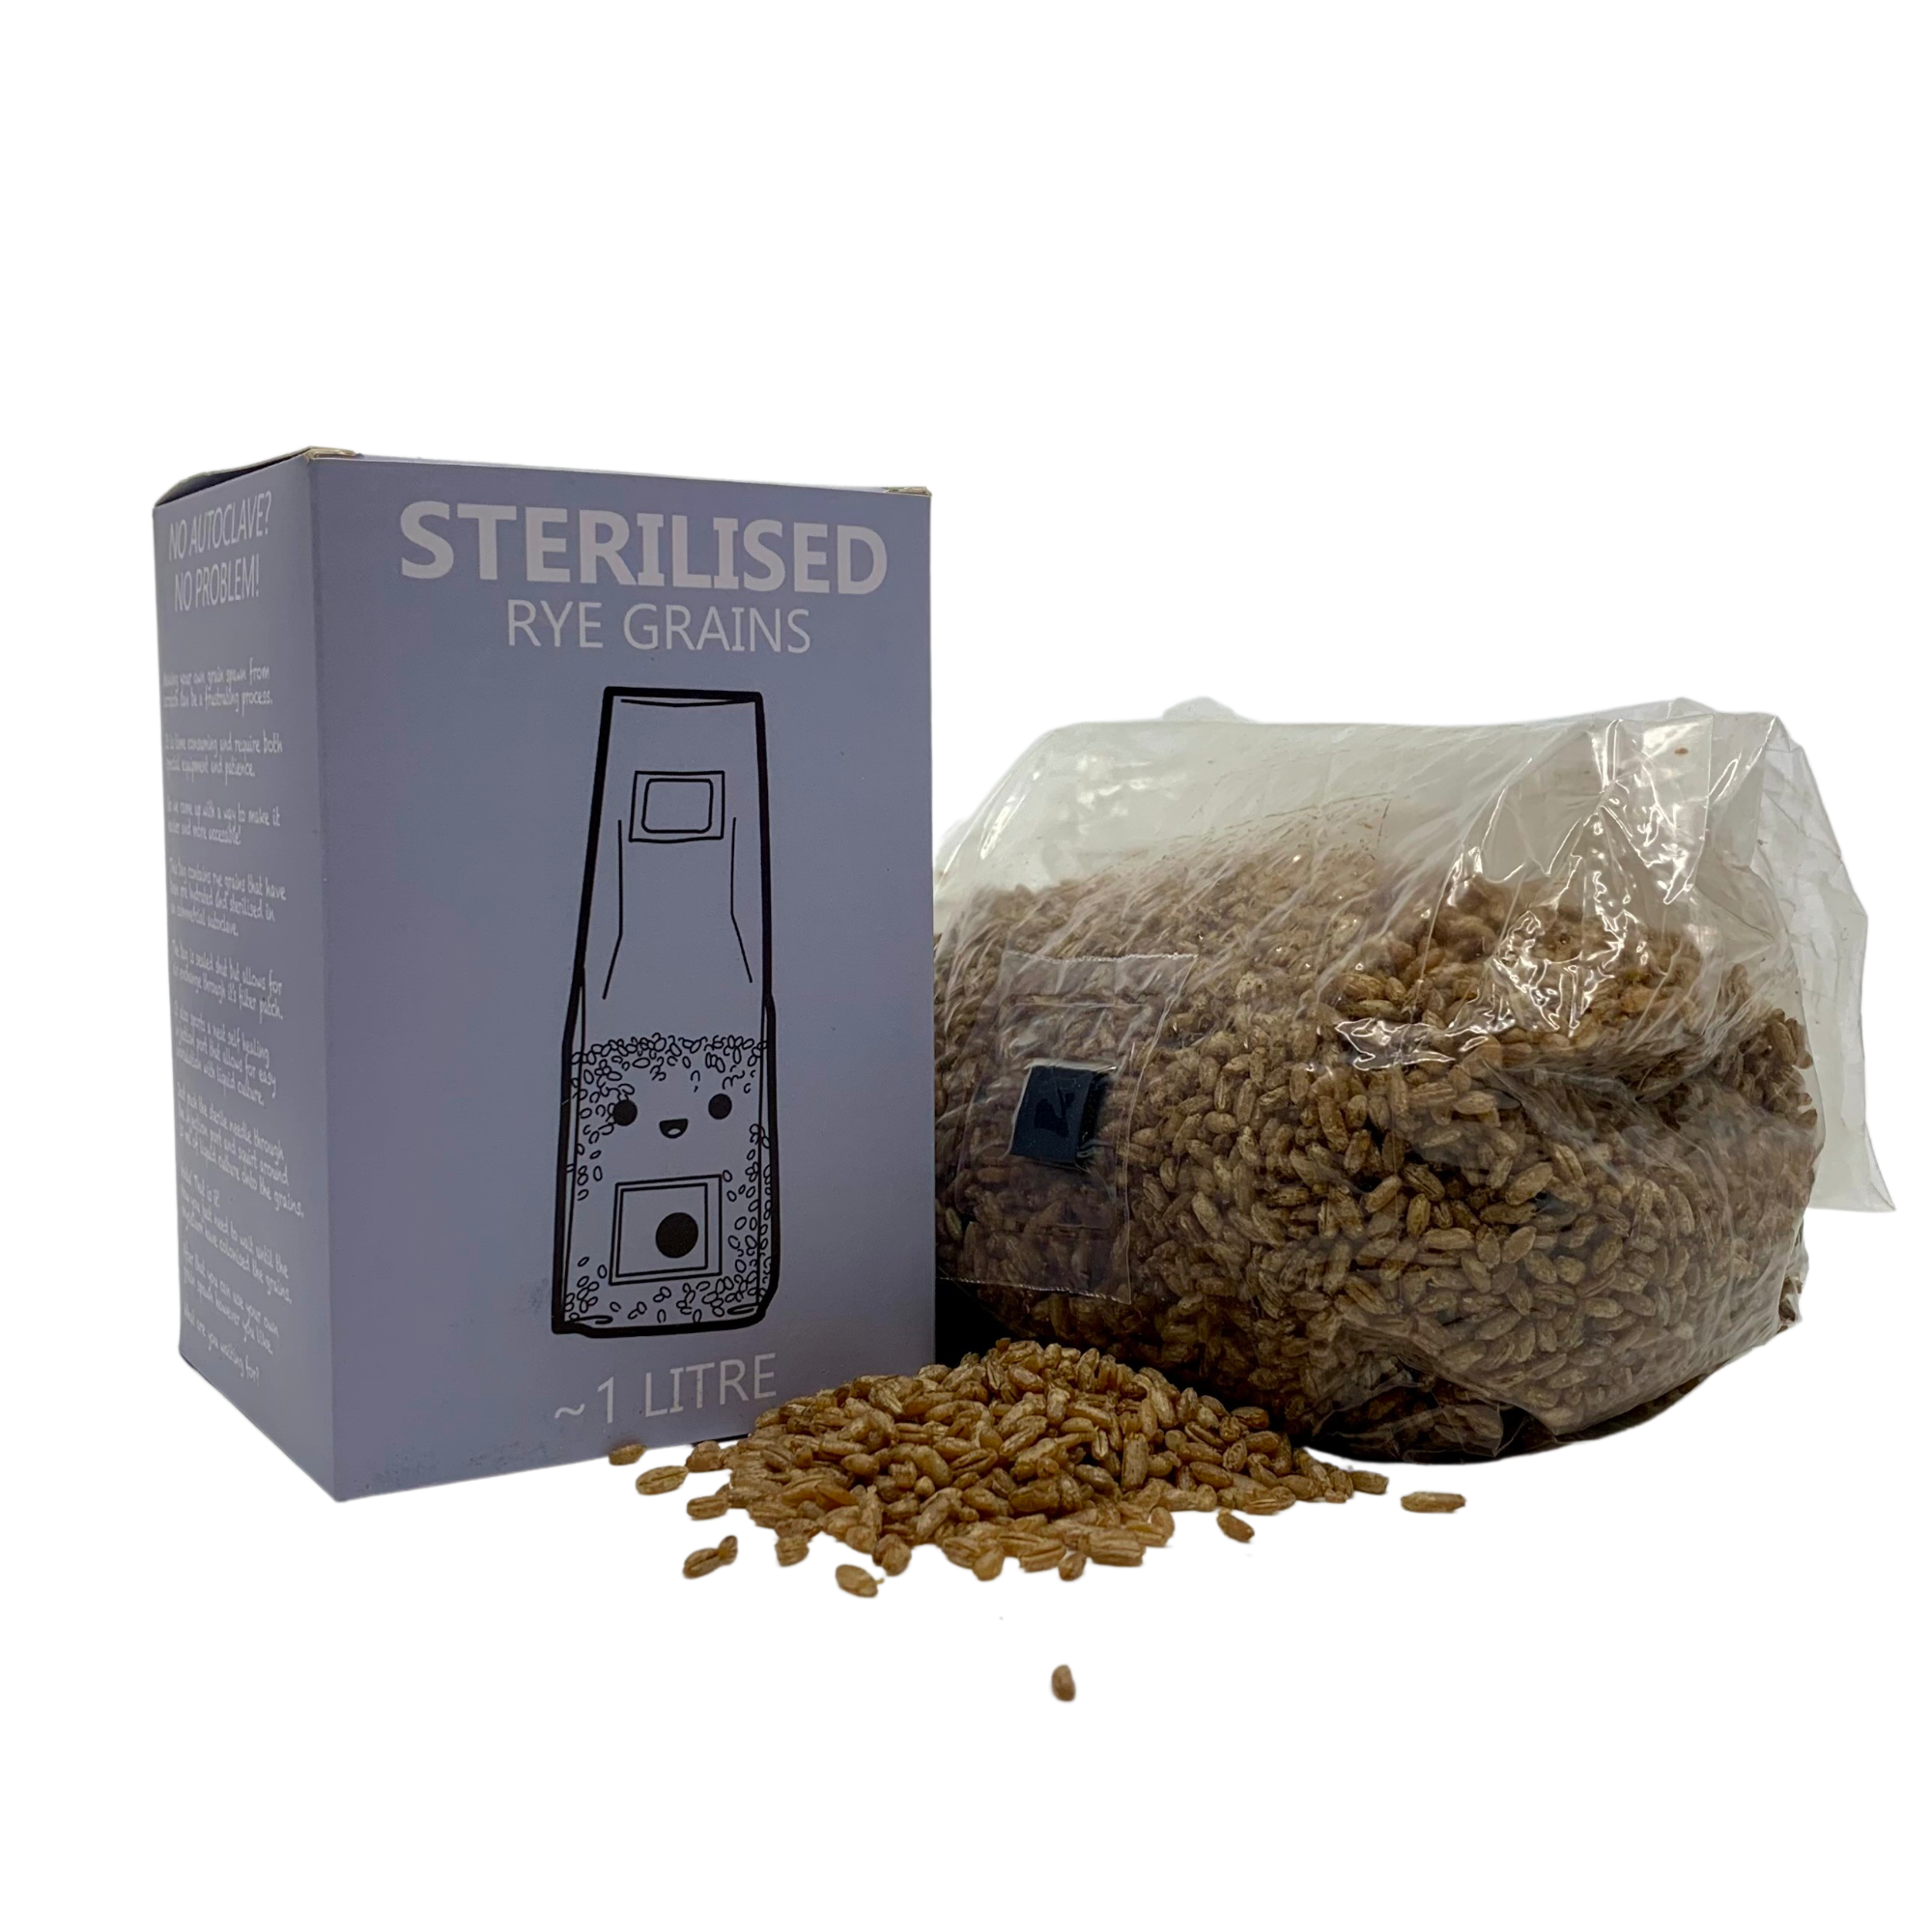 Sterilised rye grains